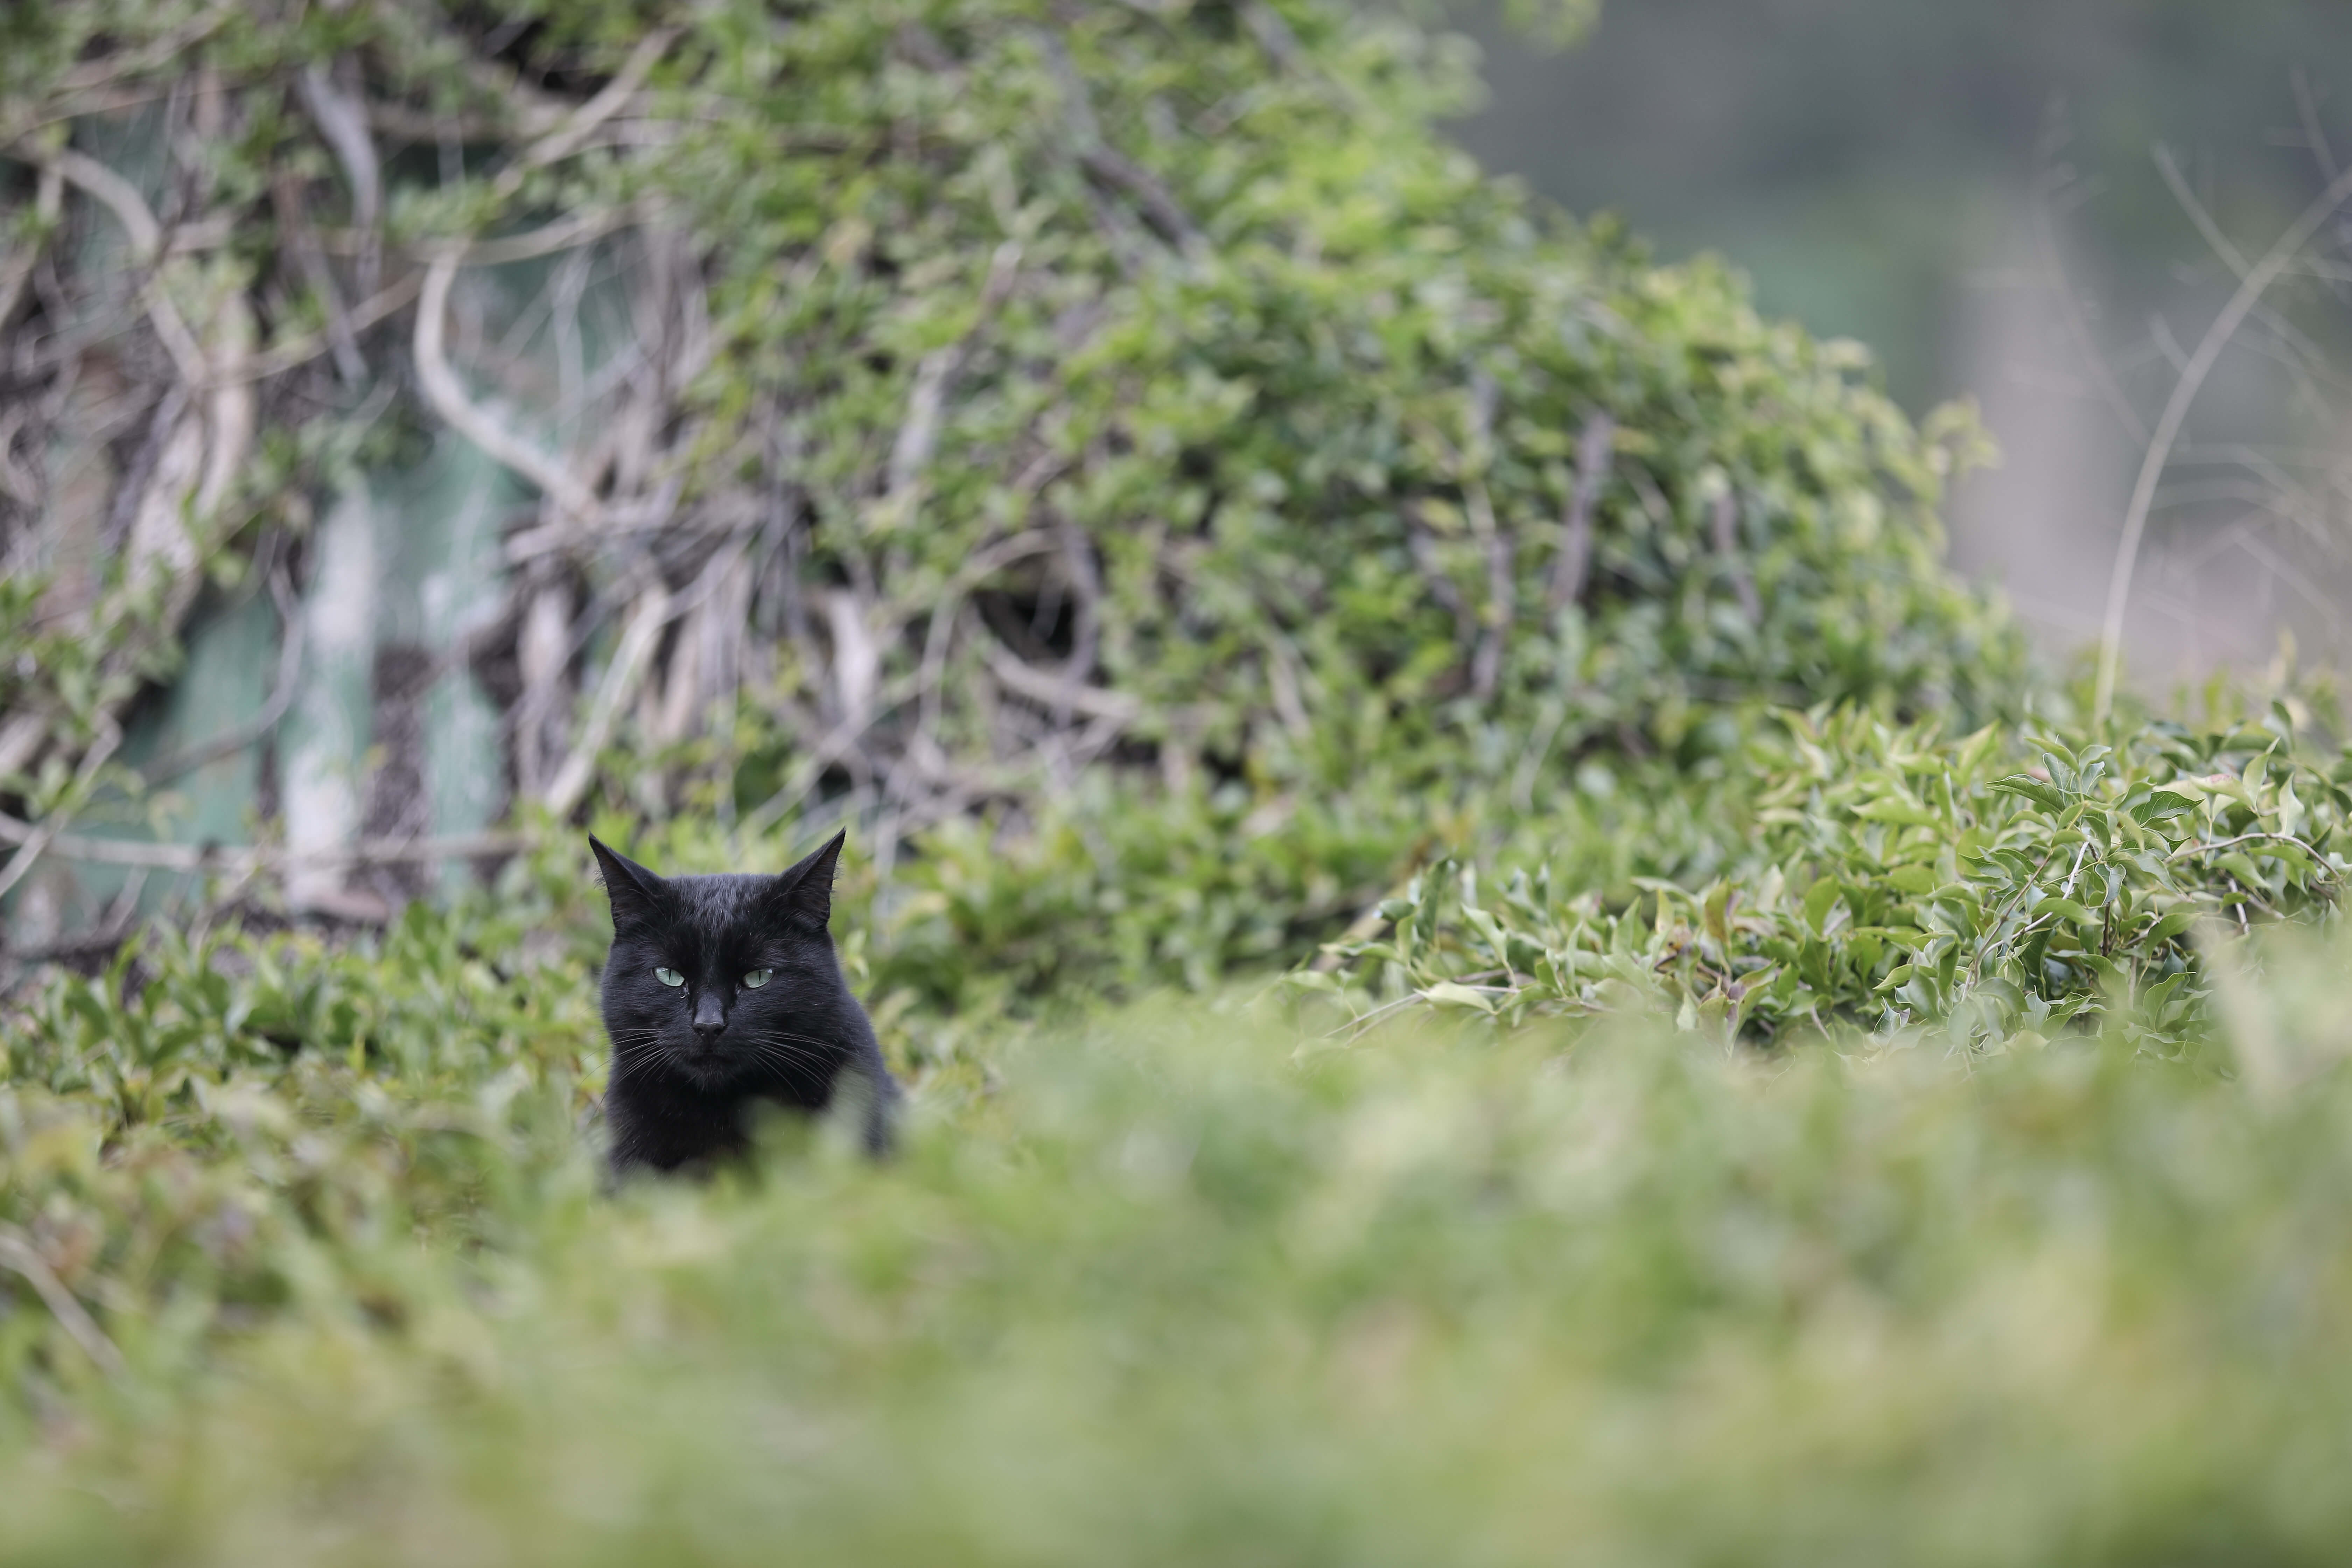 Image of black cat hiding in greenery taken by Dr. Chris Brown